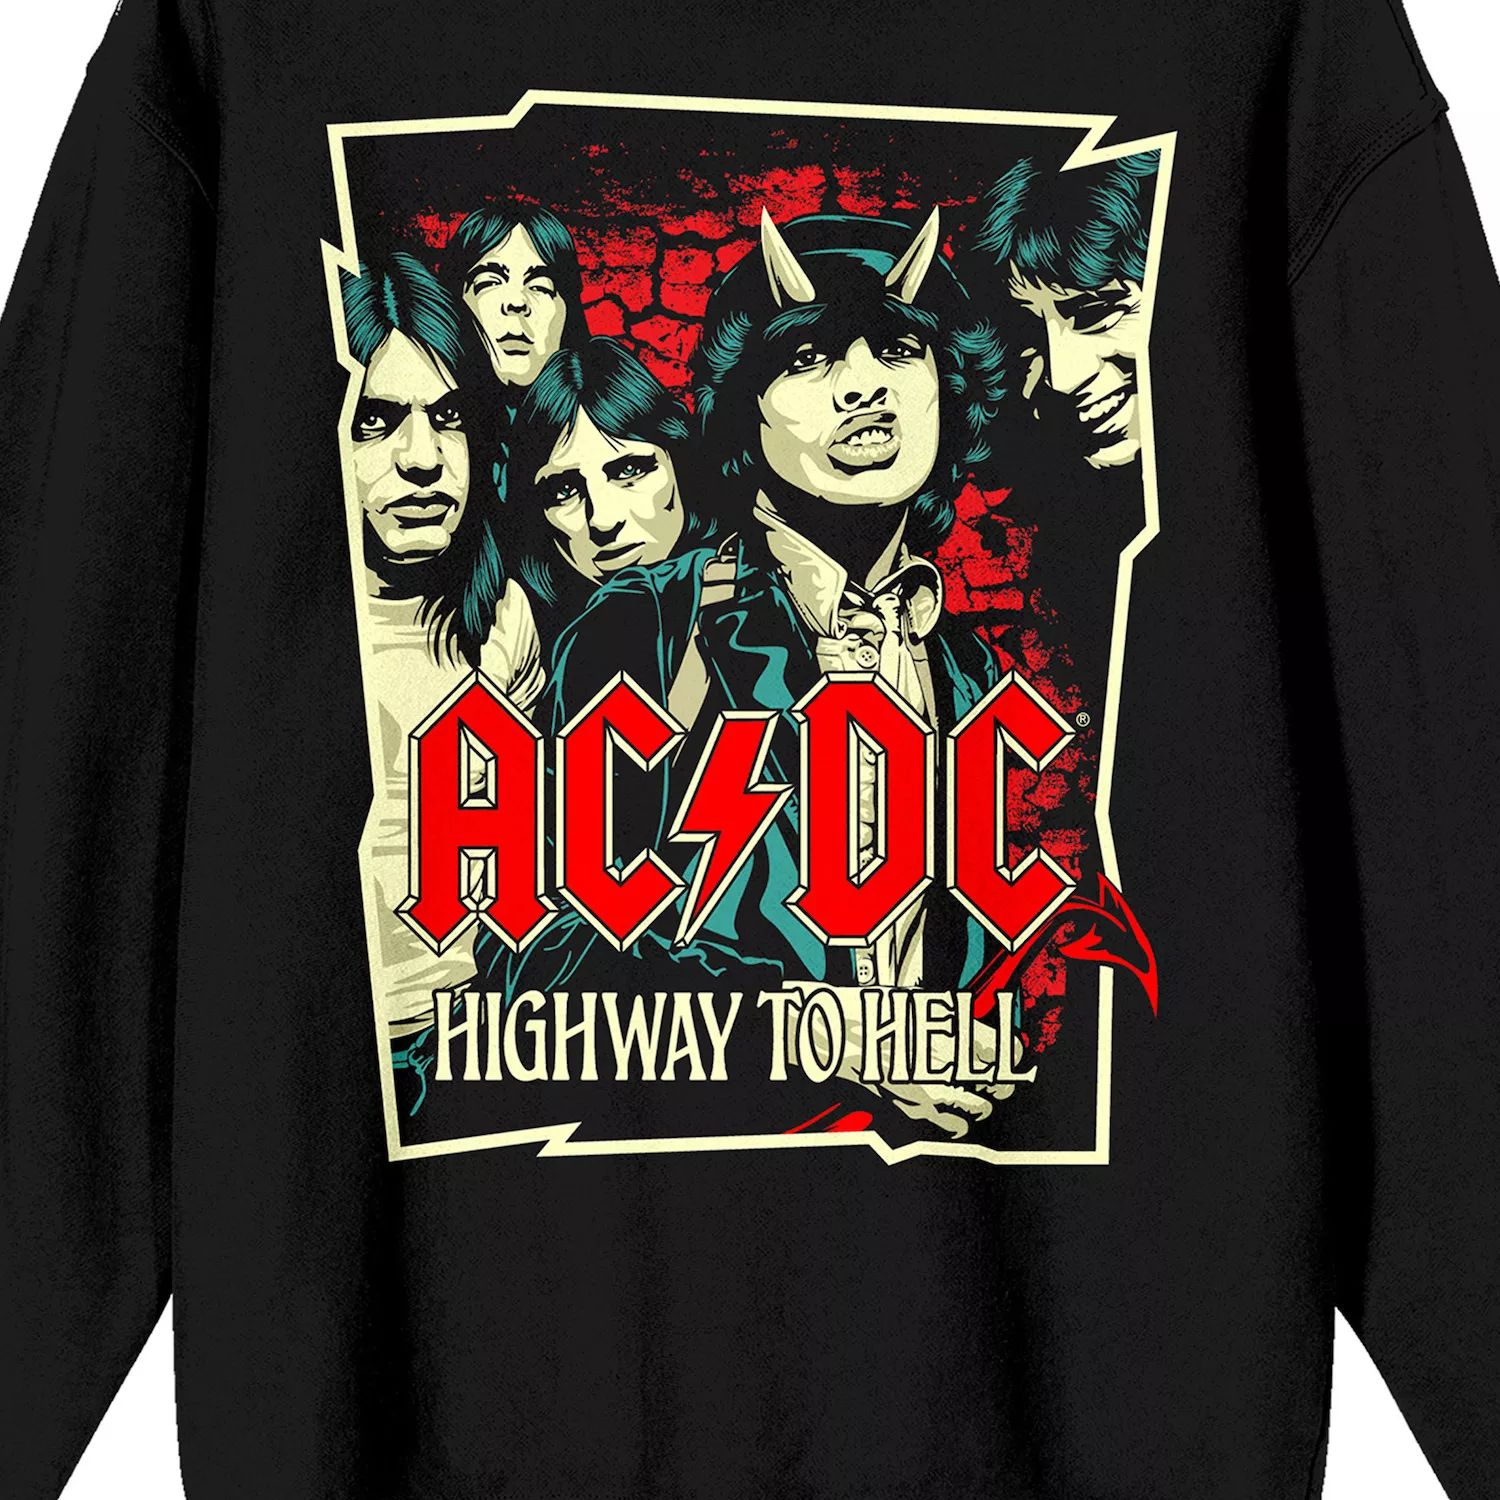 Мужская футболка AC/DC Highway To Hell с рисунком Licensed Character